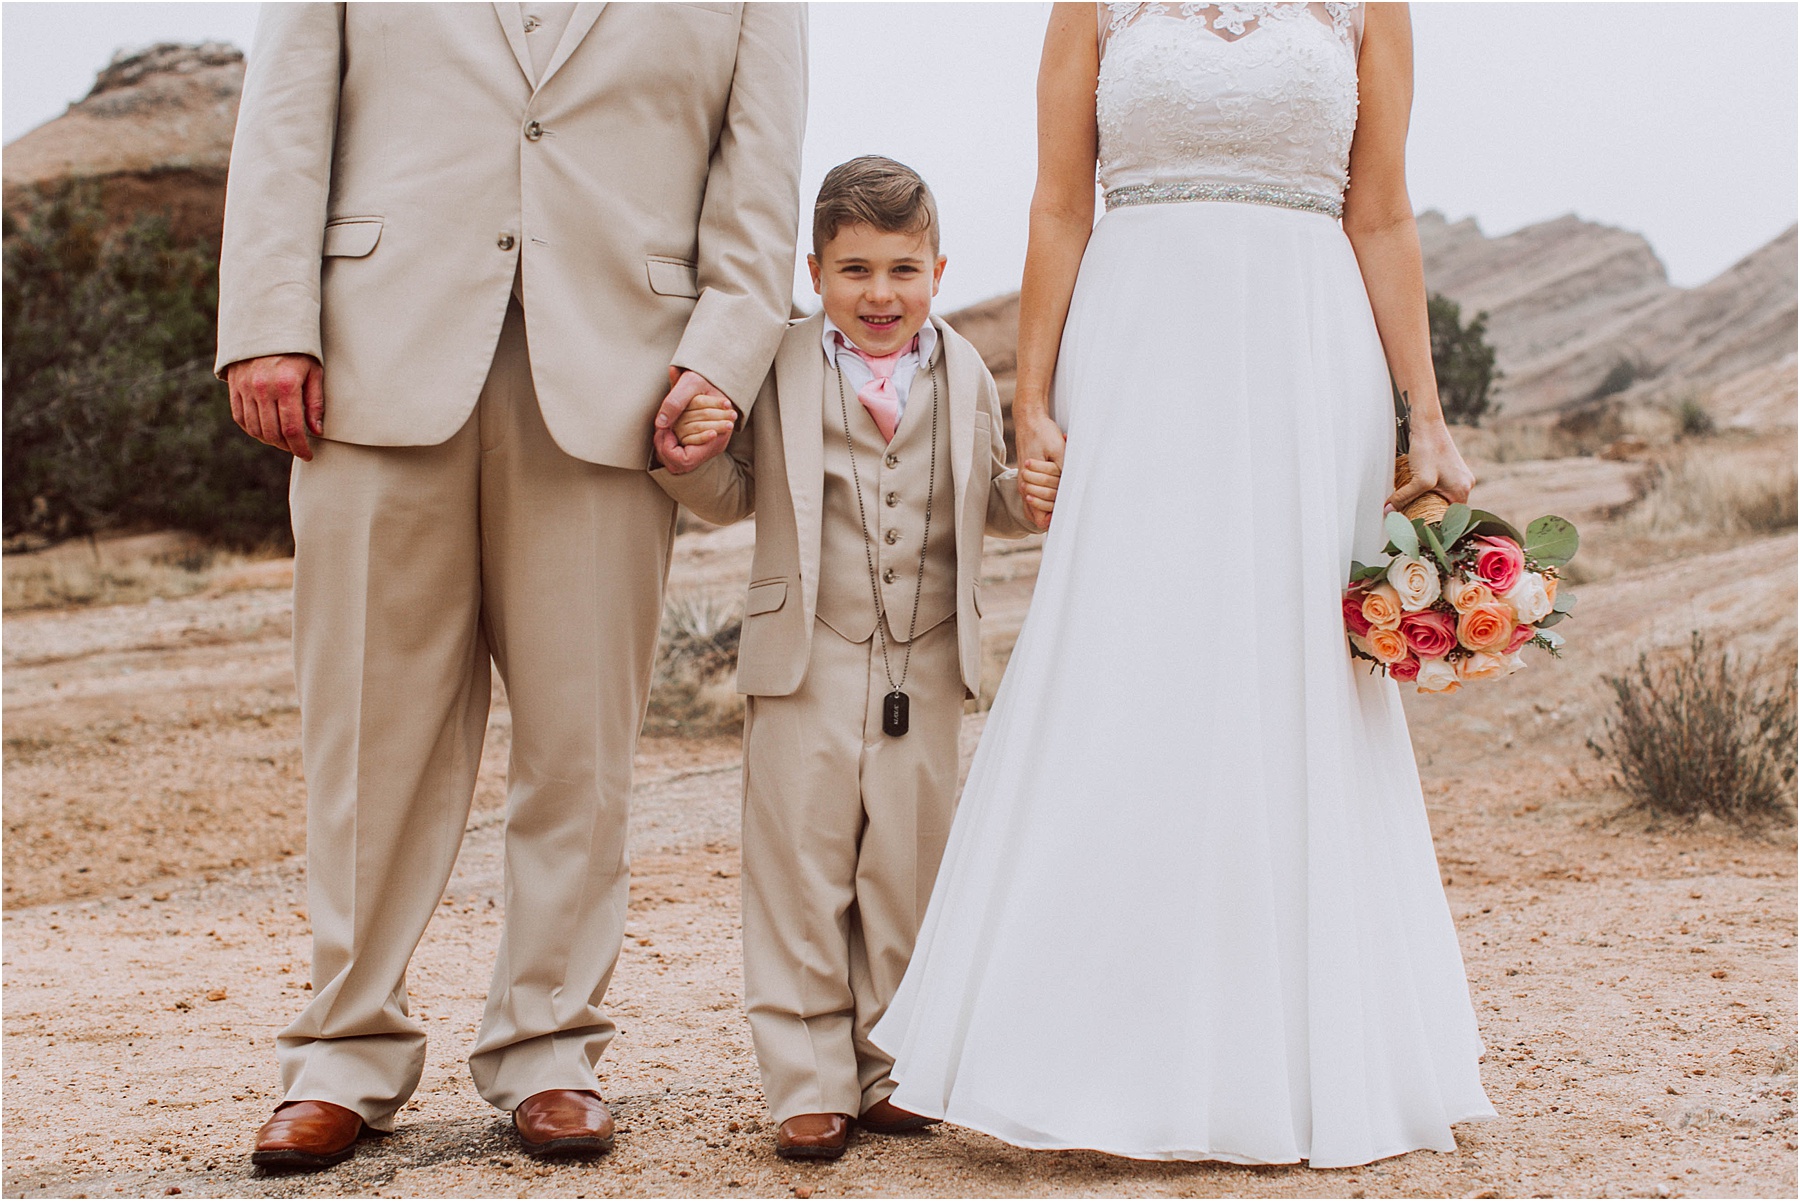 Vasquez Rocks Intimate Wedding & Elopement Photography - Bride & Groom Portraits Rainy Day